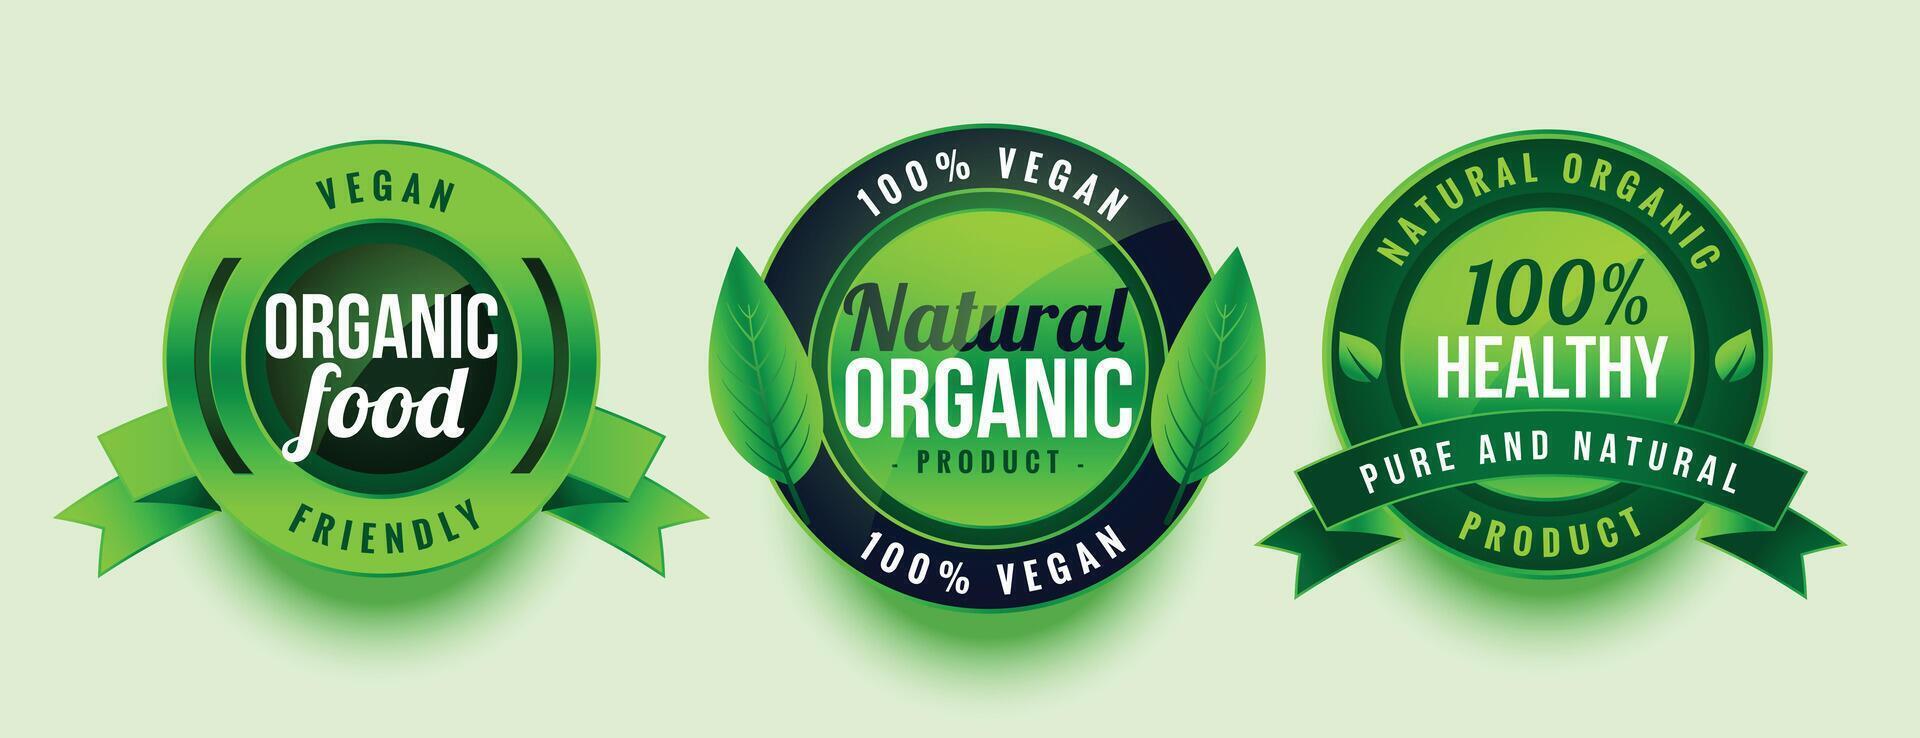 natural orgánico sano comida verde etiquetas diseño vector